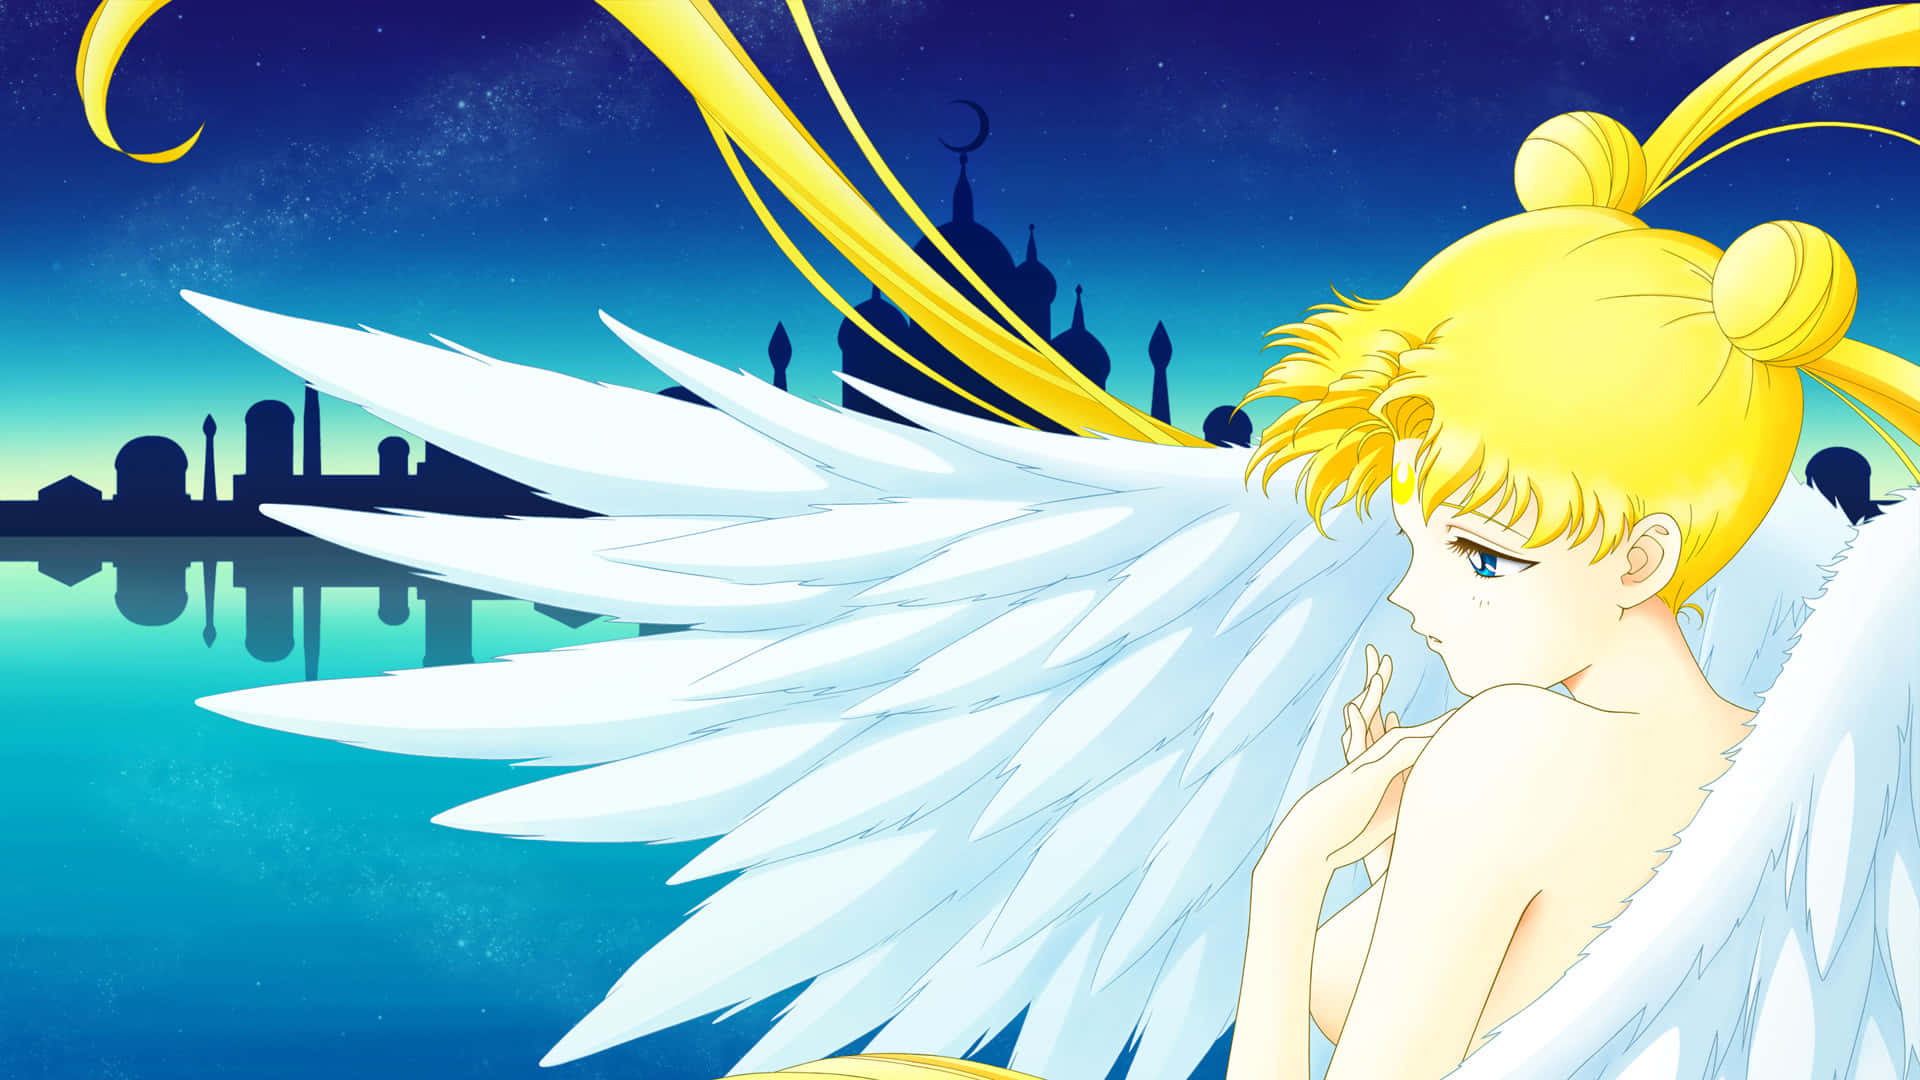 "The Magical Warrior—Sailor Moon"